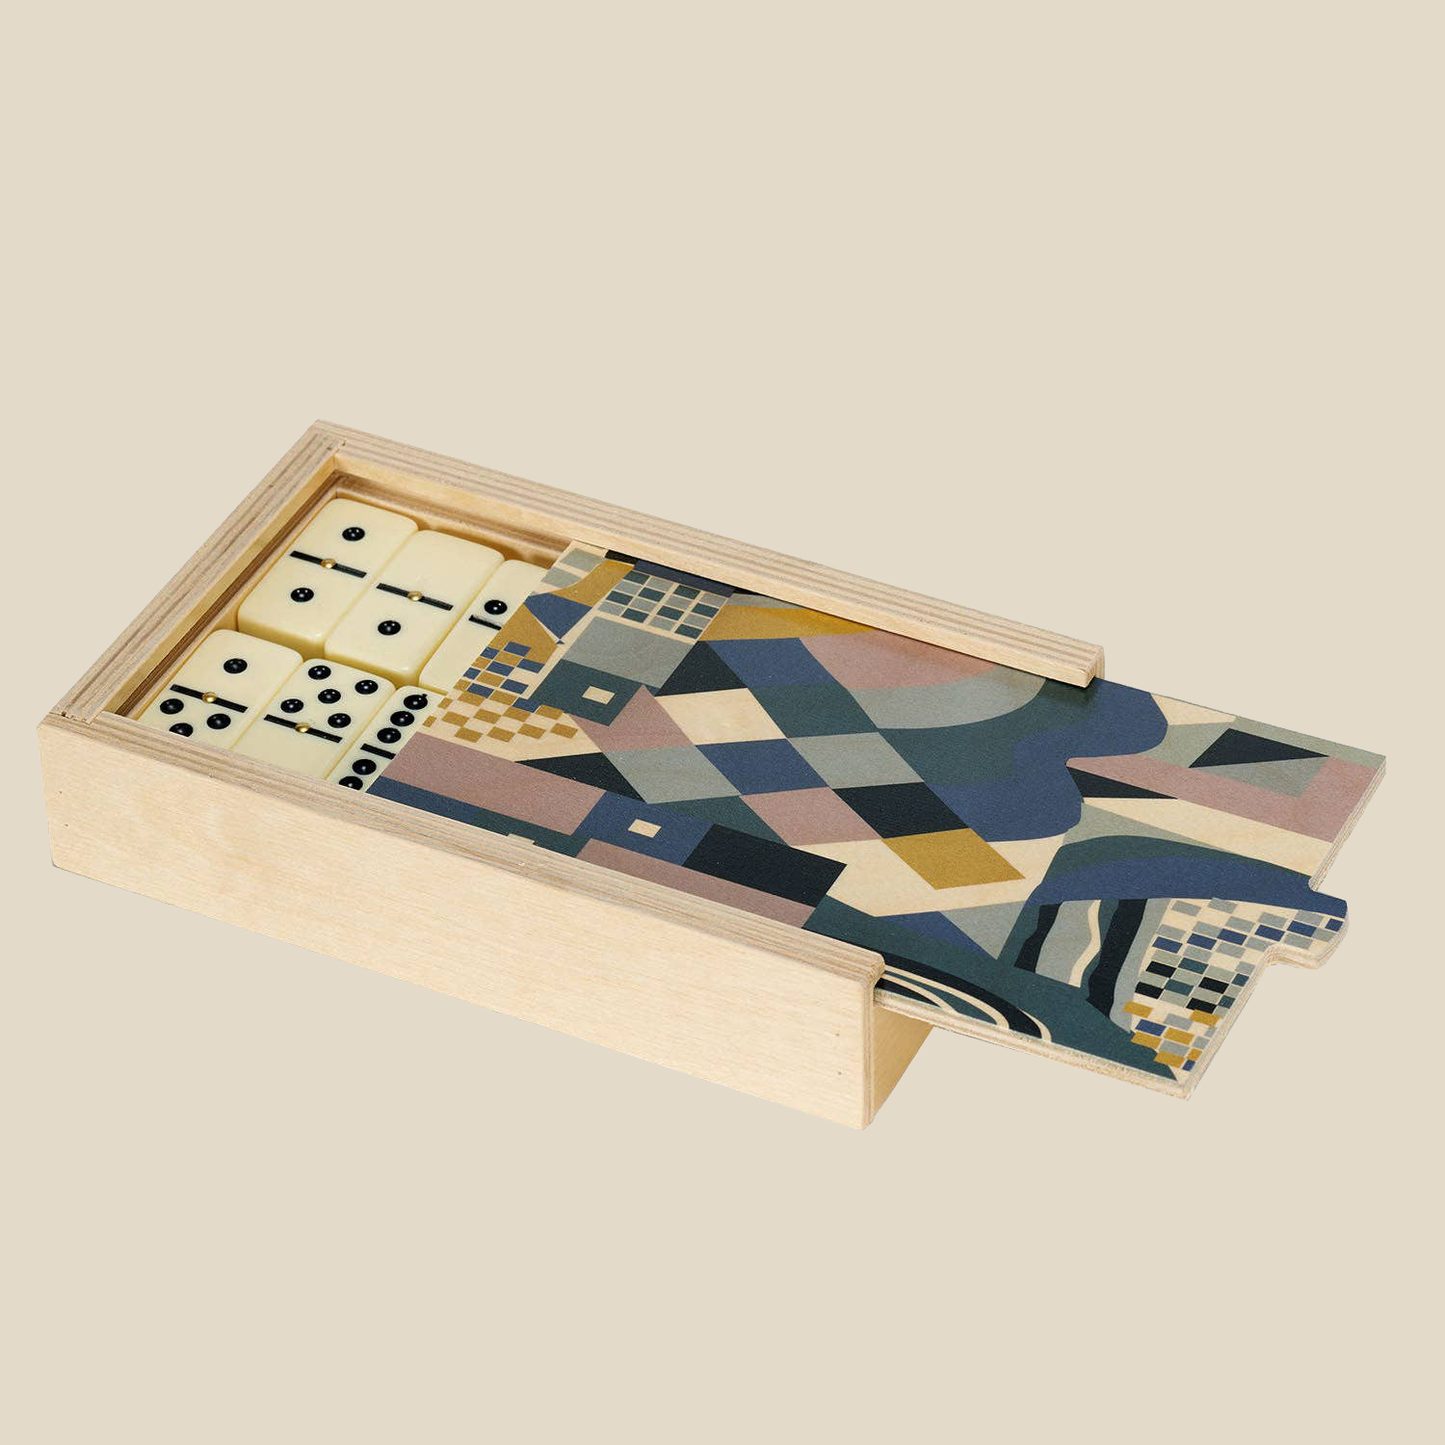 paloma teal domino set by wolfum studio